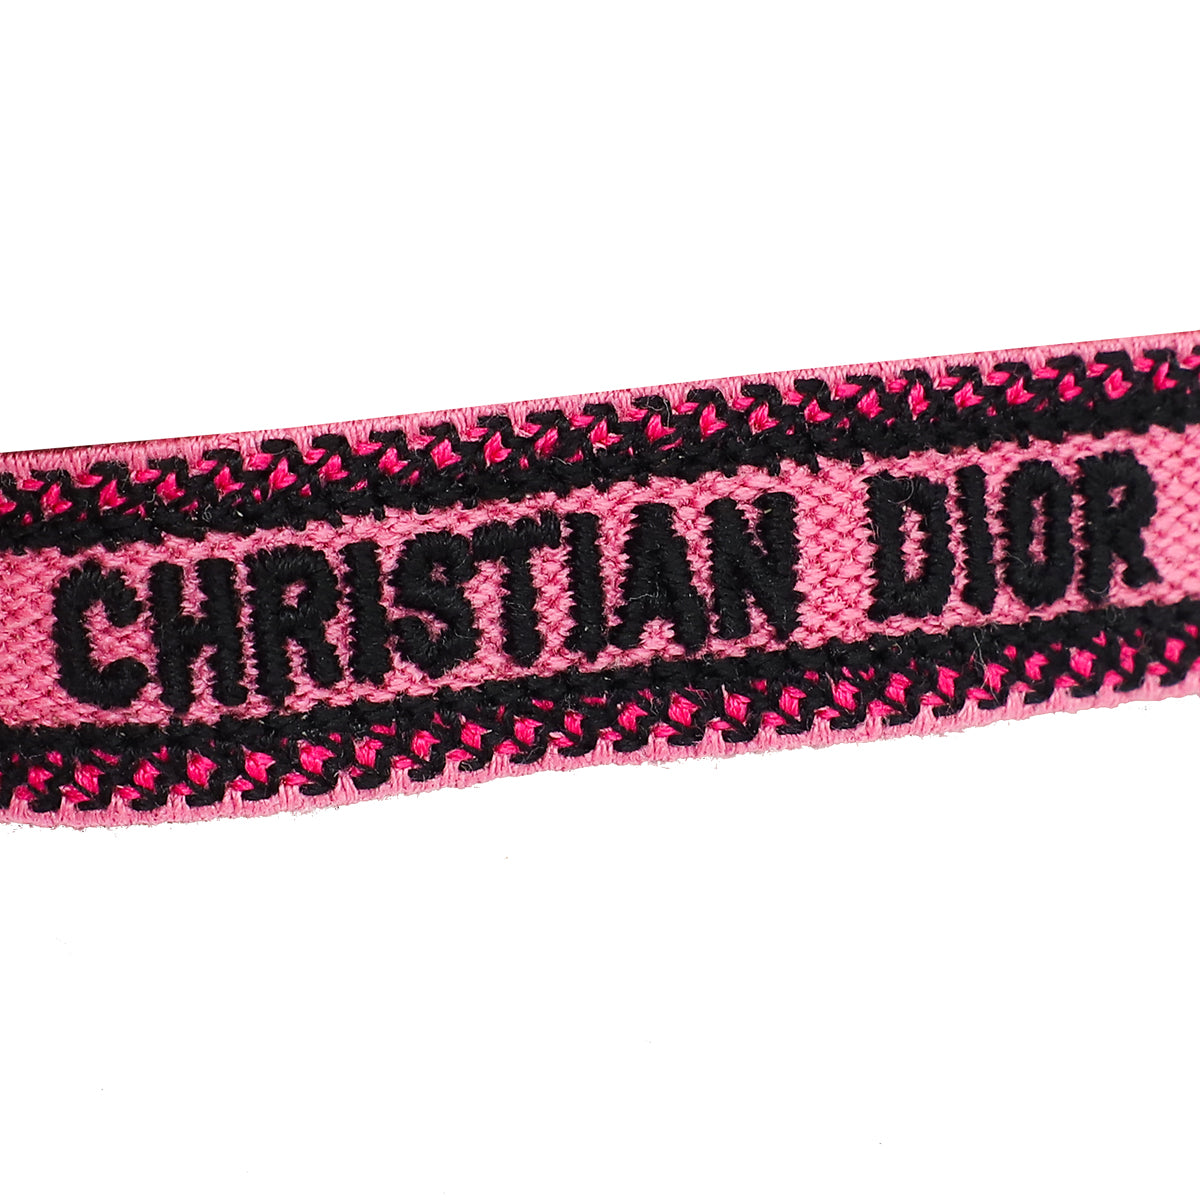 Christian Dior Bicolor J'adior Bracelet Set